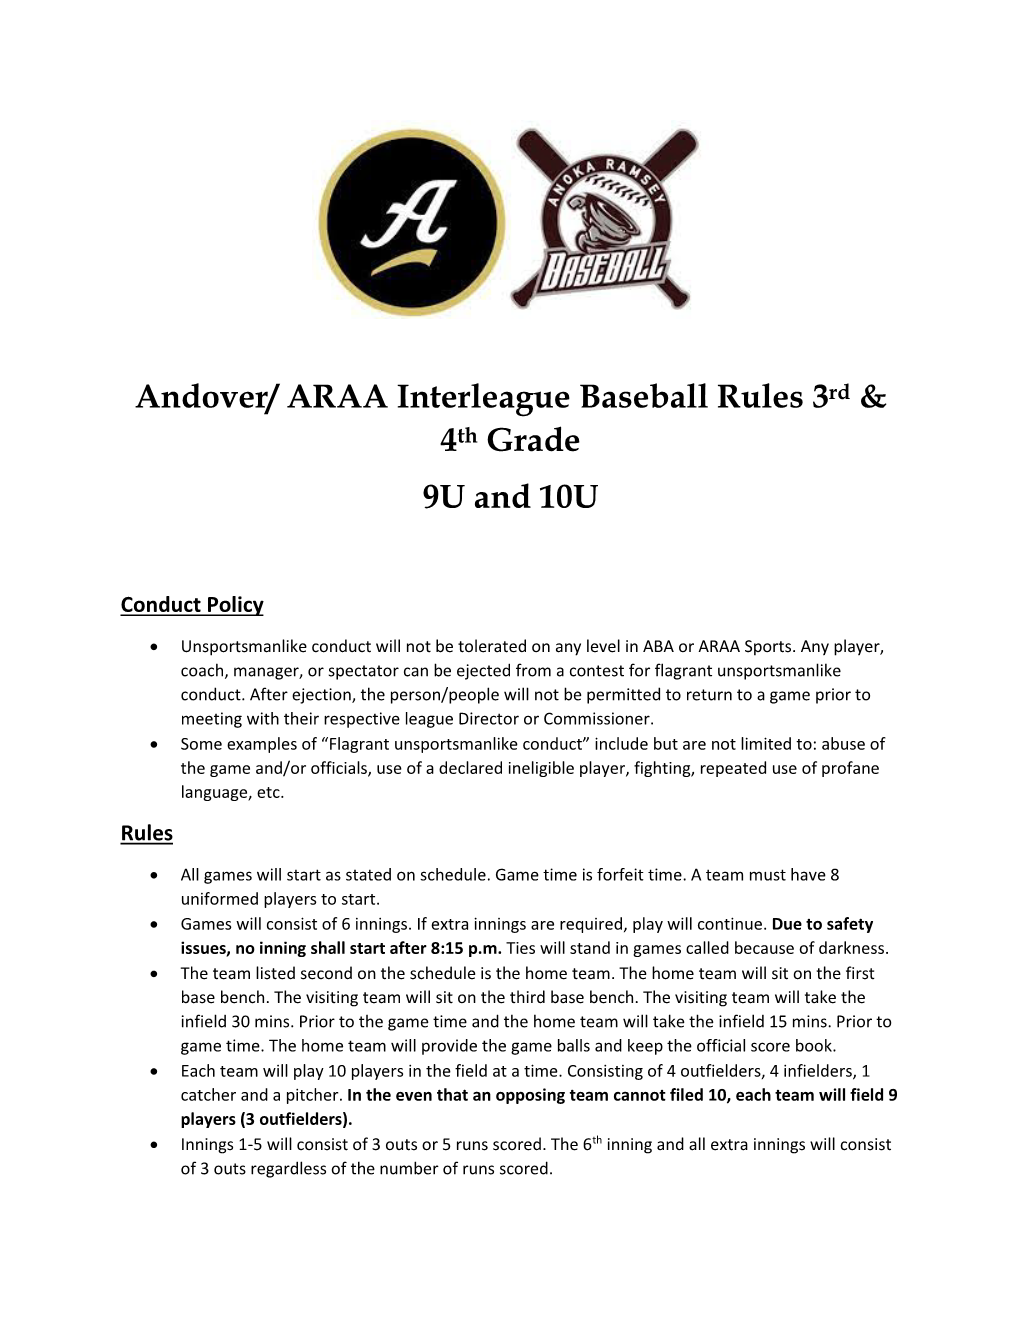 Andover/ ARAA Interleague Baseball Rules 3Rd & 4Th Grade 9U And